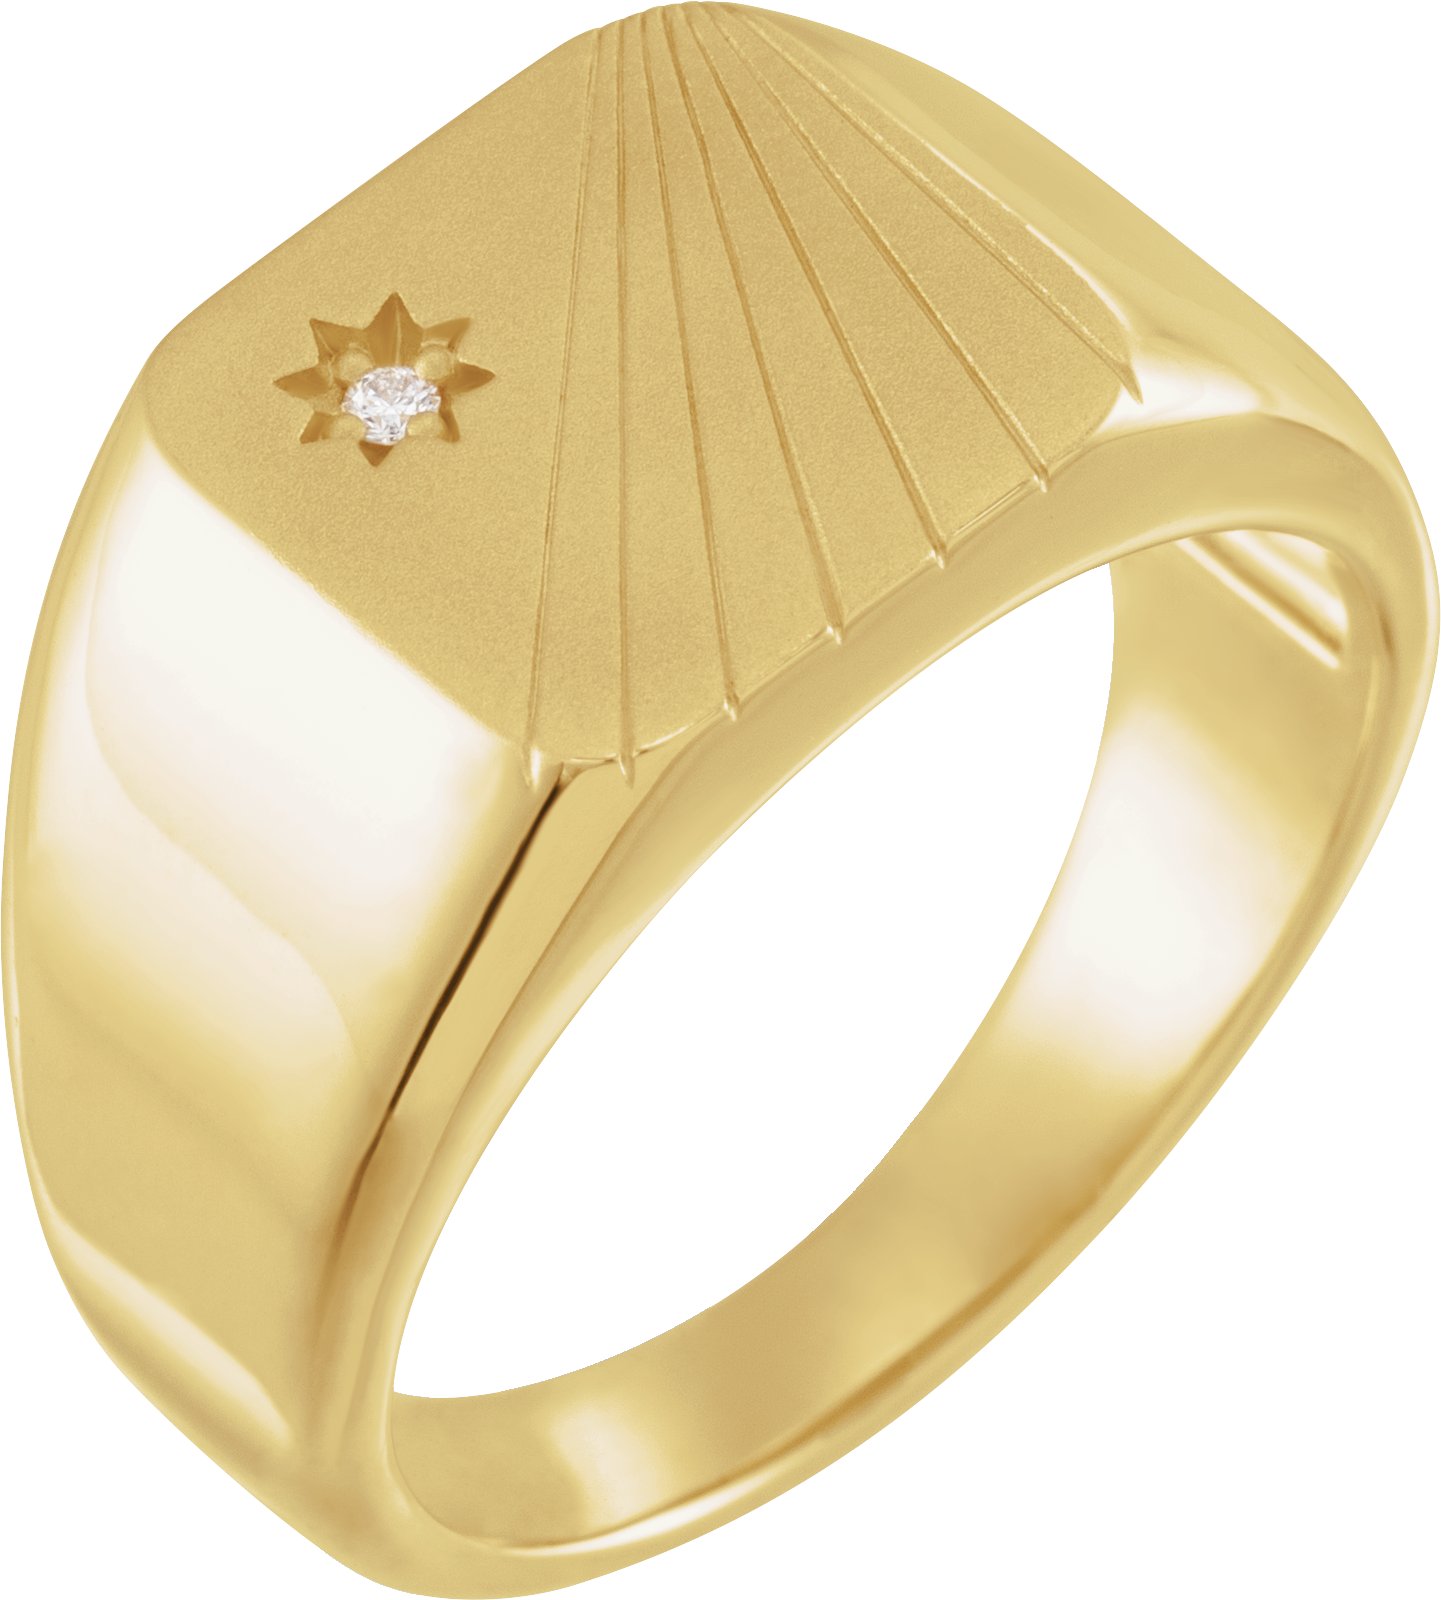 Diamond Rings | Fashion Jewelry Distributor | Wholesale | Stuller